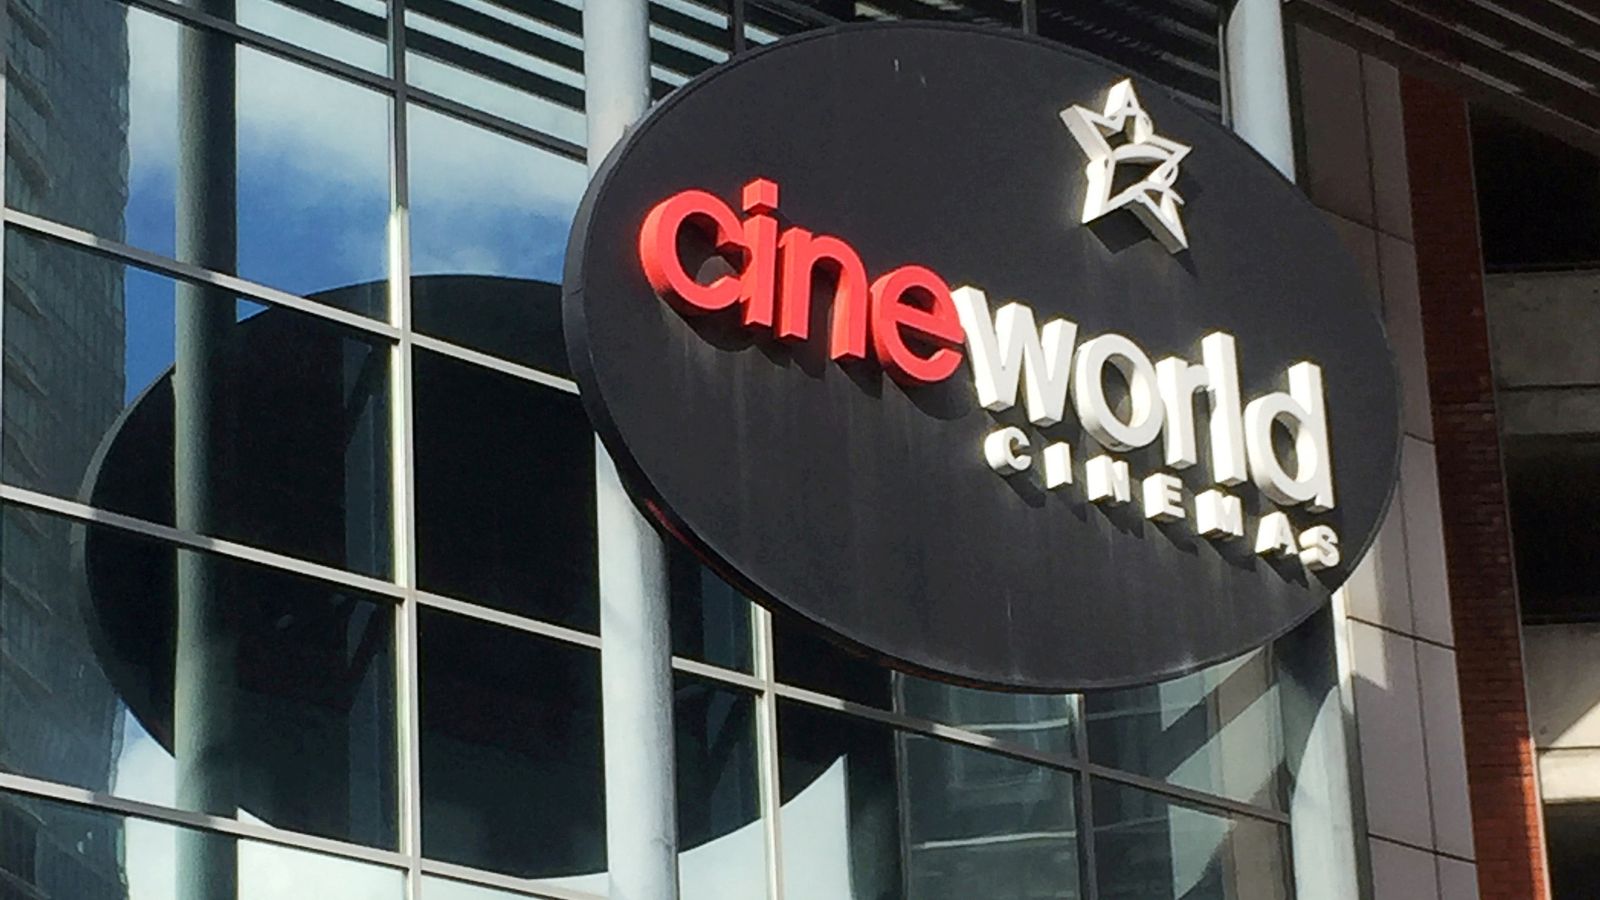 Vue screens financial backers for blockbuster tilt at rival Cineworld